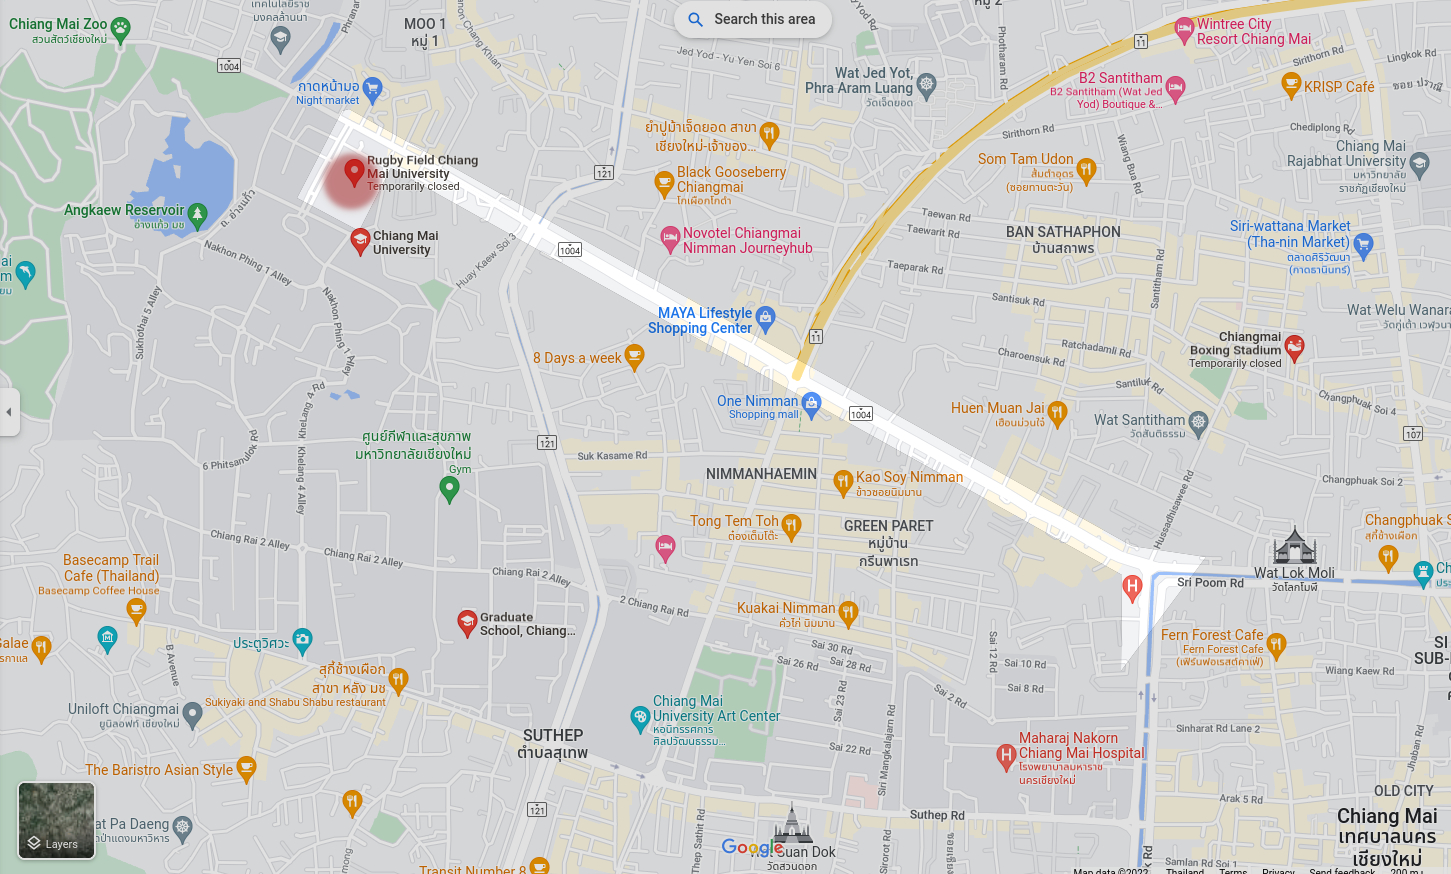 CMU Rugby Field on Google Maps